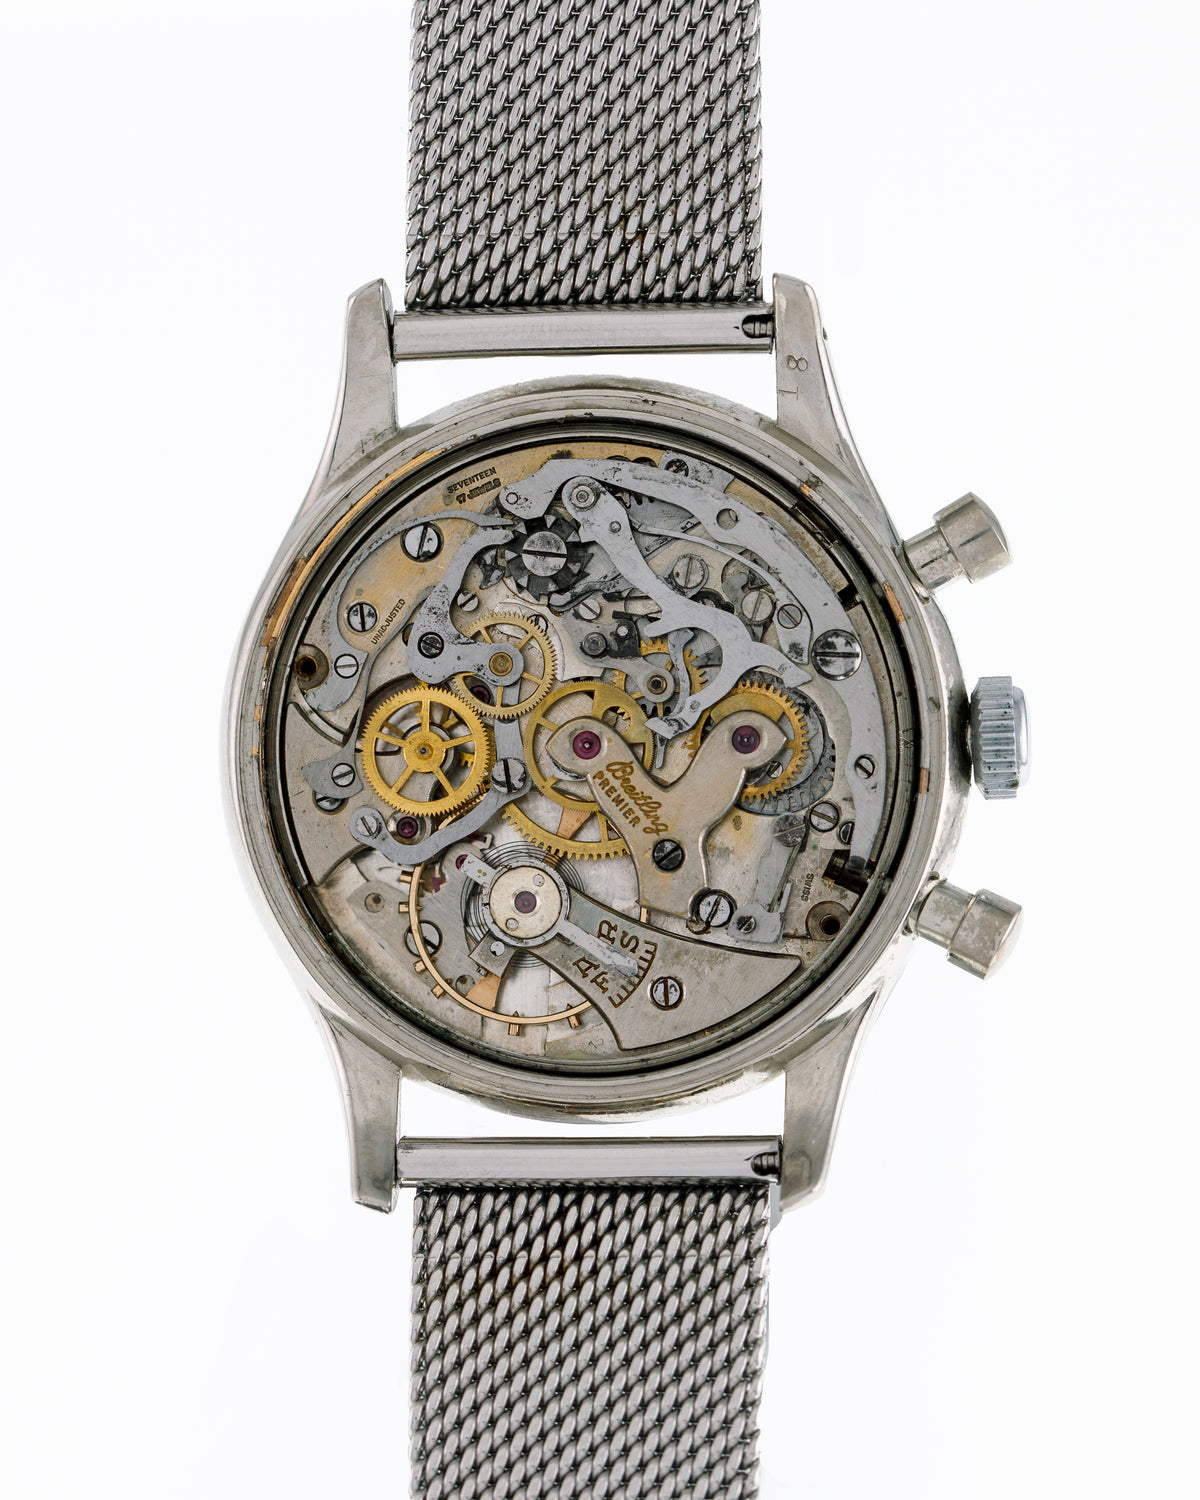 Breitling chronograph ref. 777